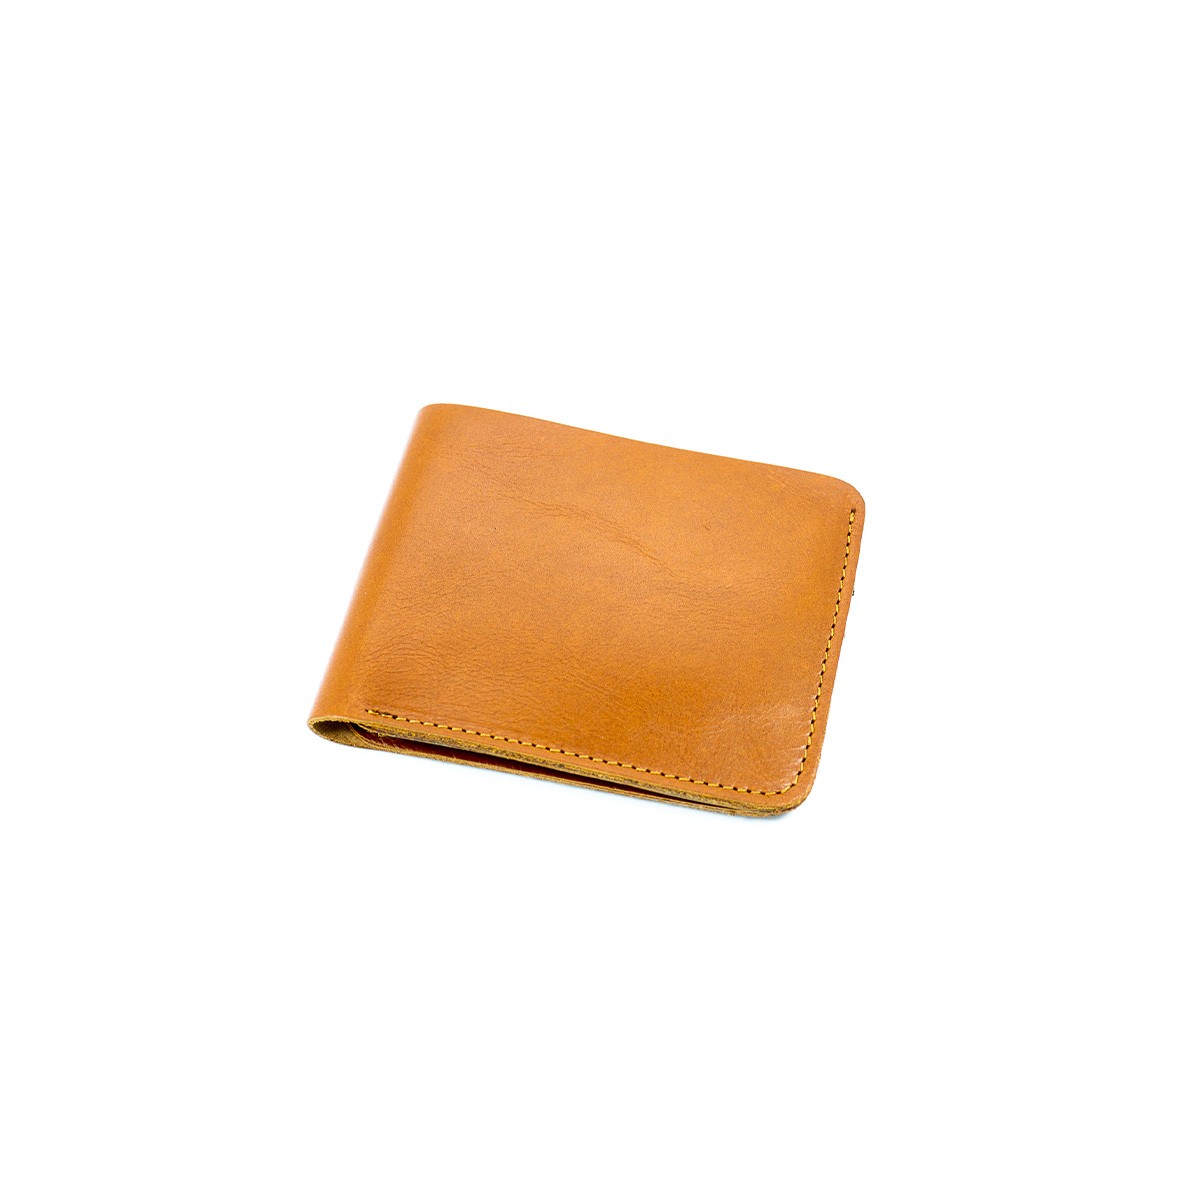 Customizable Genuine Leather Wallet Garnic - Light Tan